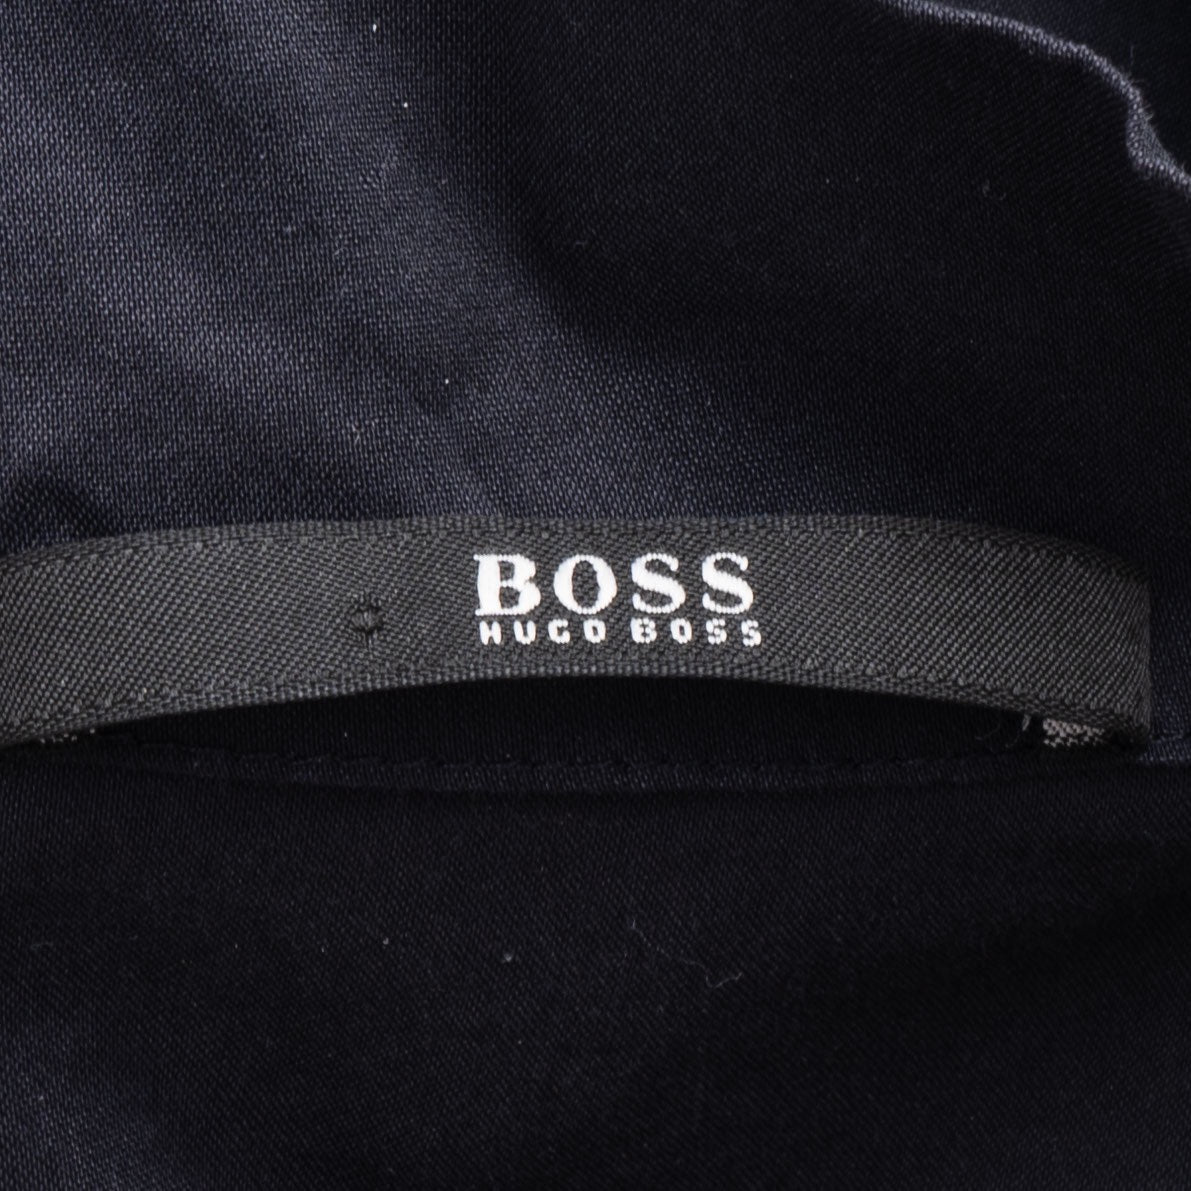 Hugo Boss Line Dress (L)